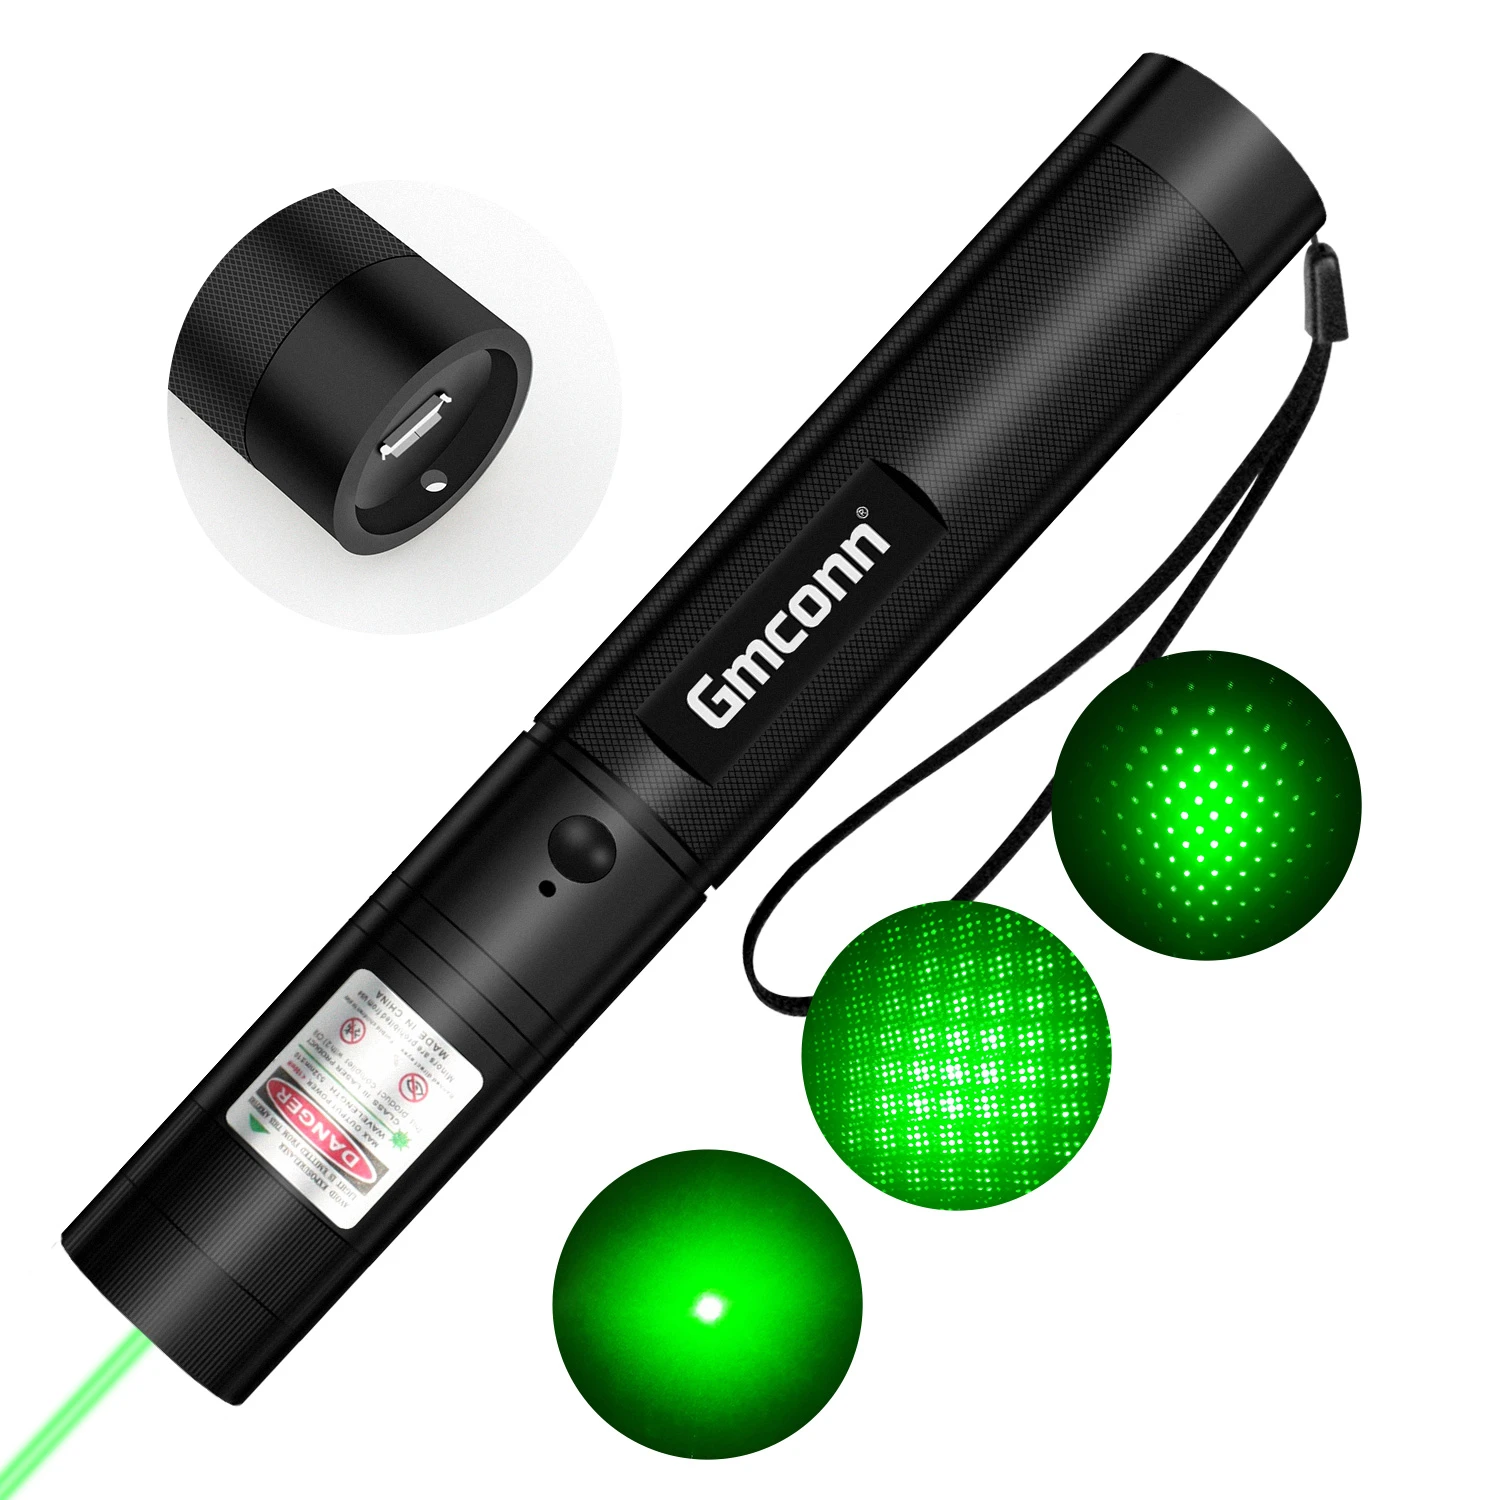 Long Range laser green pointer, Powerful cheap laser pointer Adjustable Focus Handheld usb laser pointer